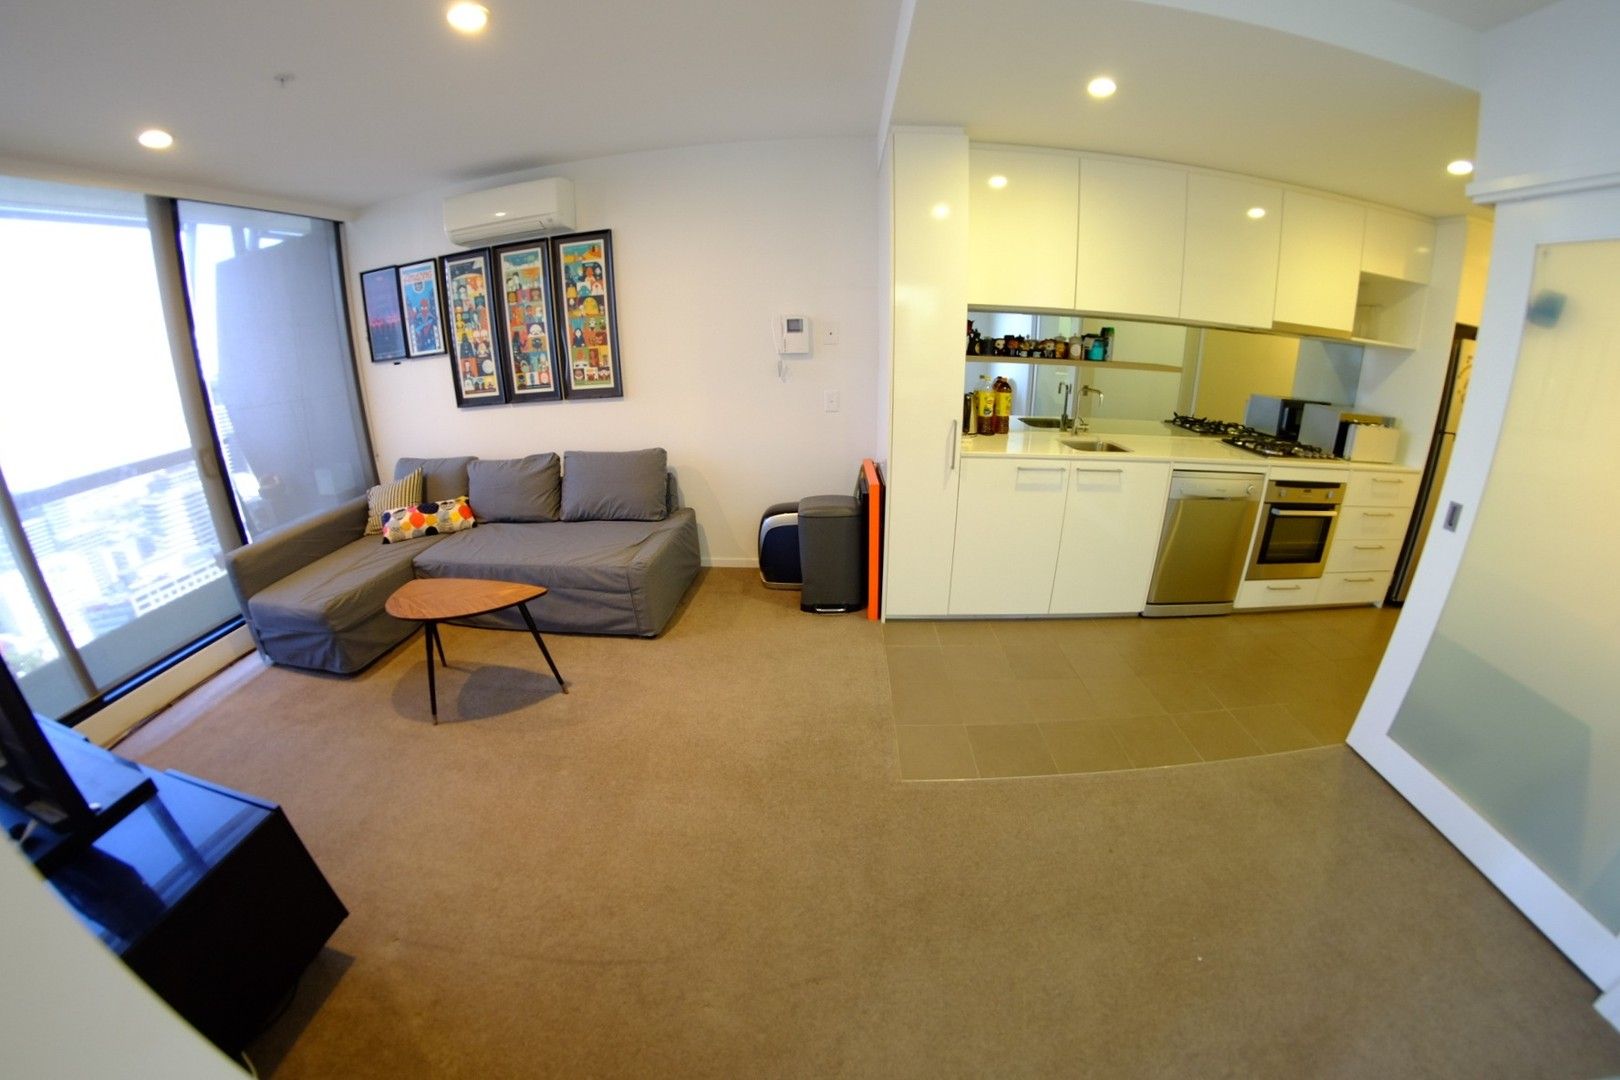 2 bedrooms Apartment / Unit / Flat in 3210/350 William Street MELBOURNE VIC, 3000